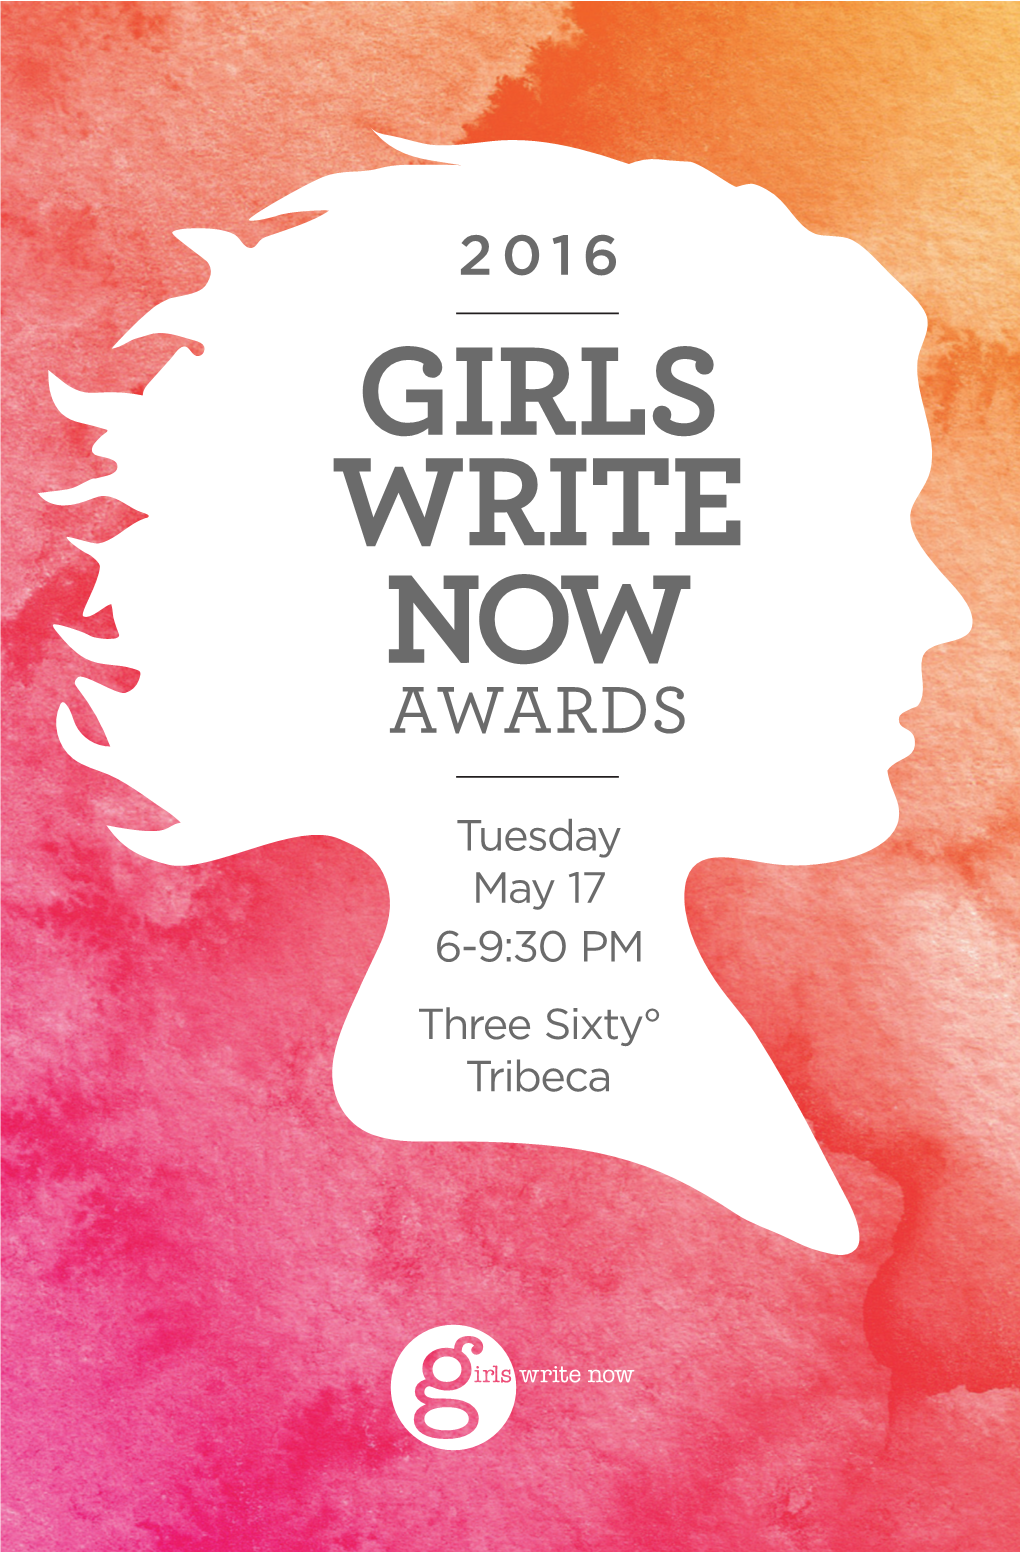 View the 2016 Girls Write Now Awards Program